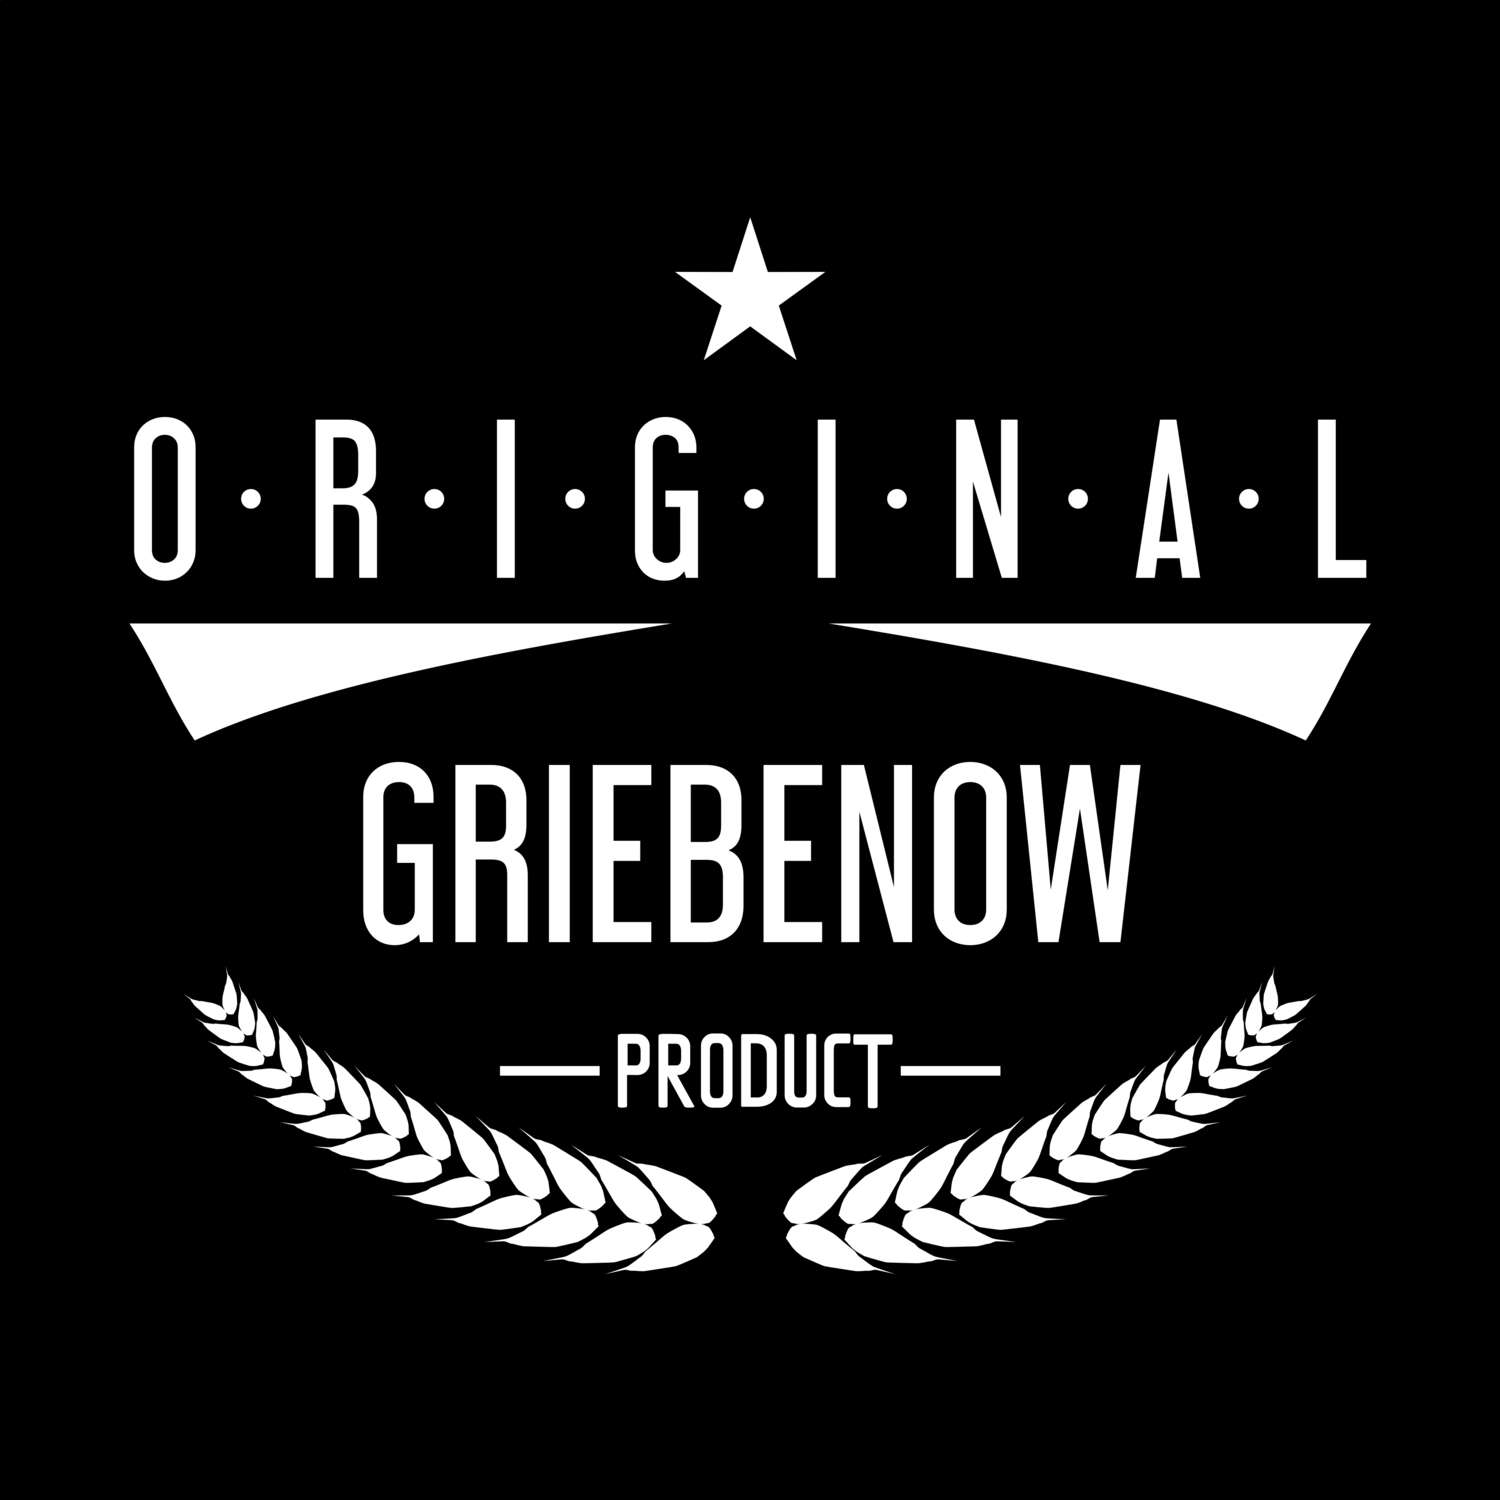 Griebenow T-Shirt »Original Product«